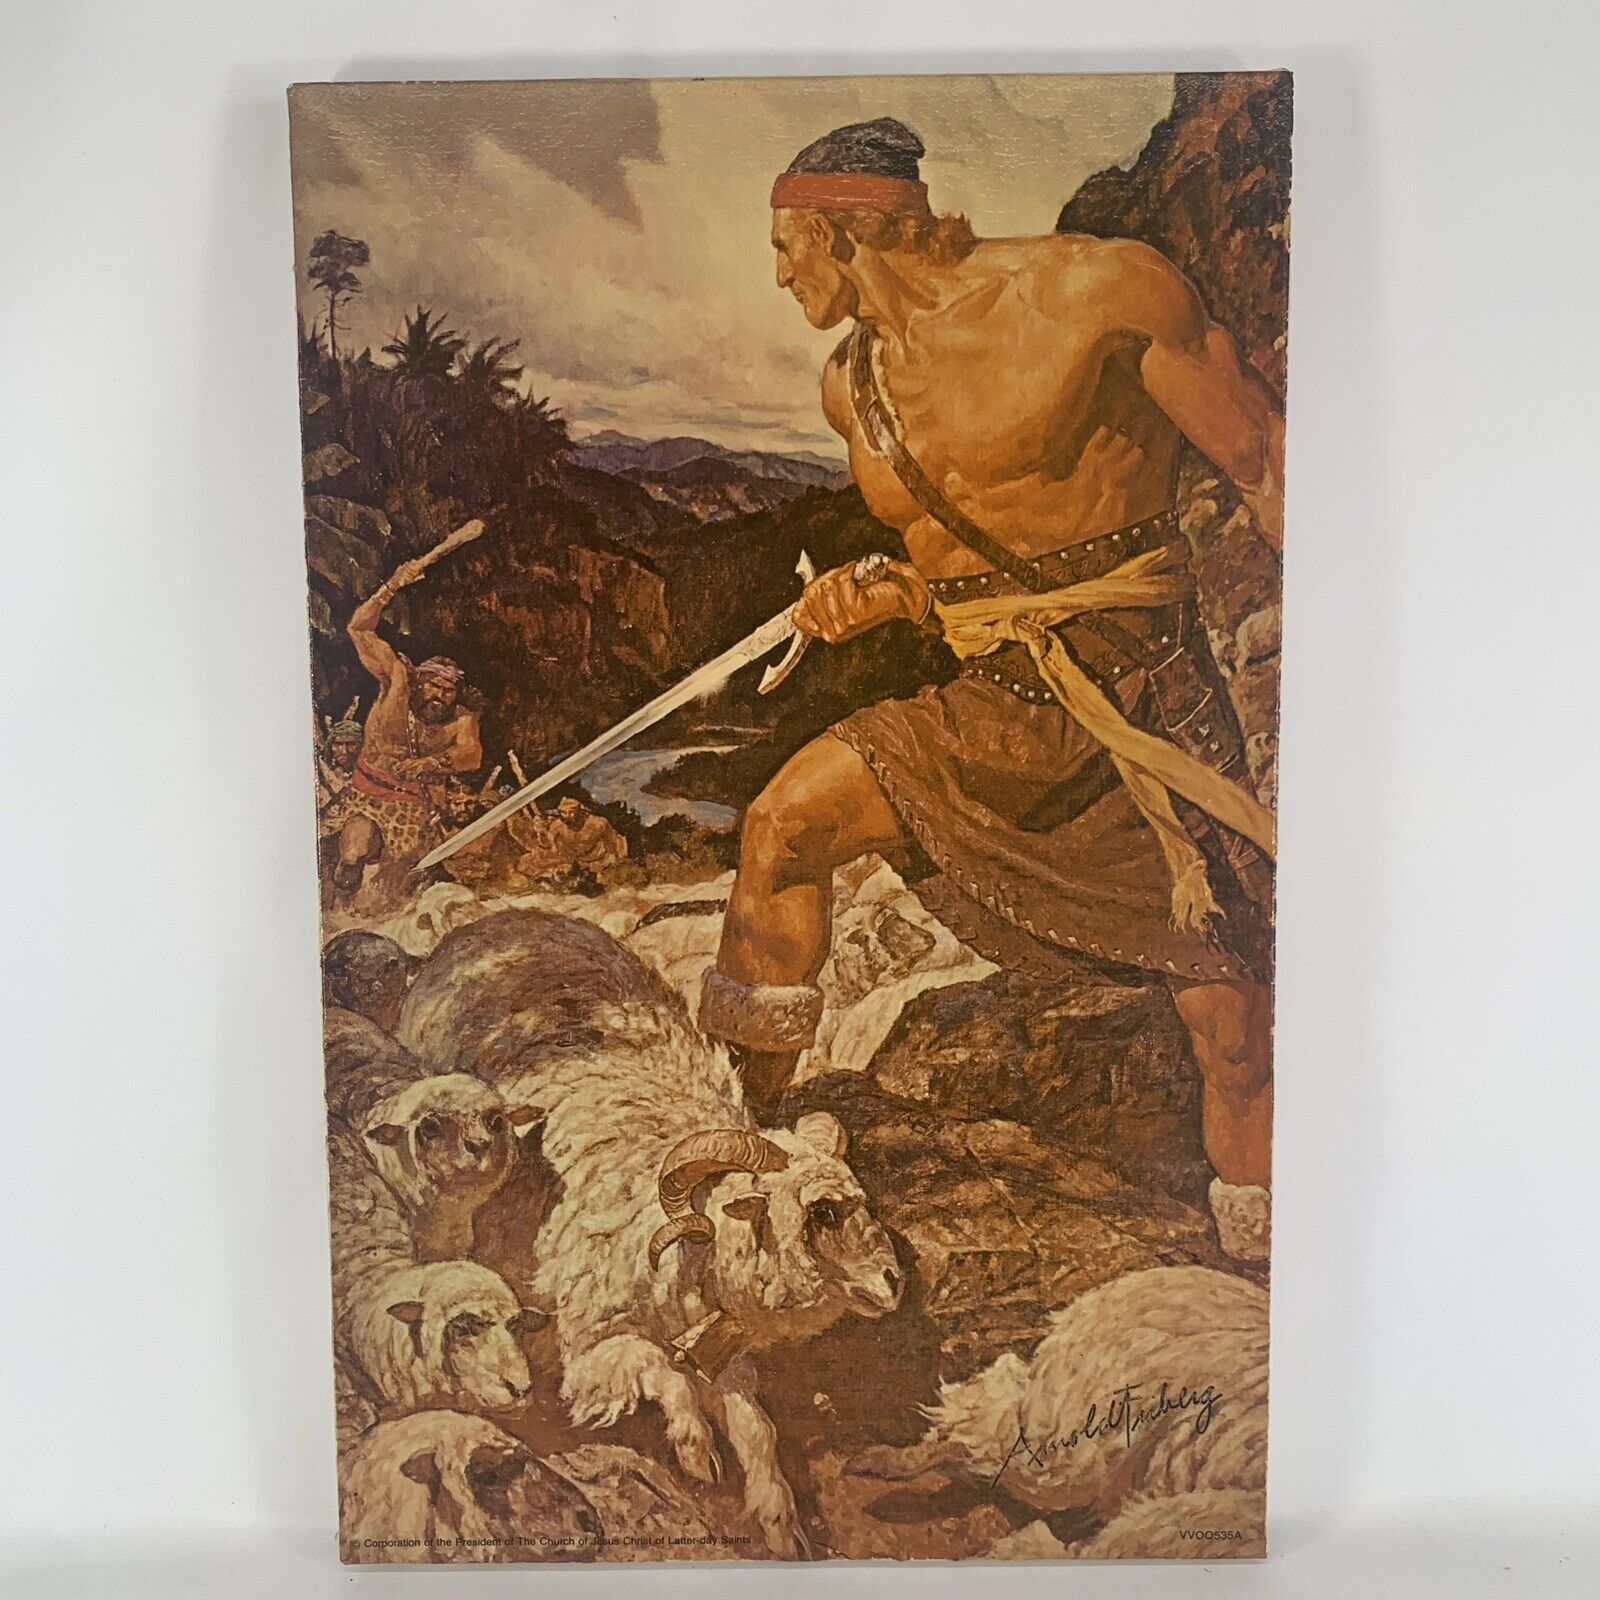 Arnold Friberg Book of Mormon Art Print on Canvas 11x17 LDS Latter Day Saints C